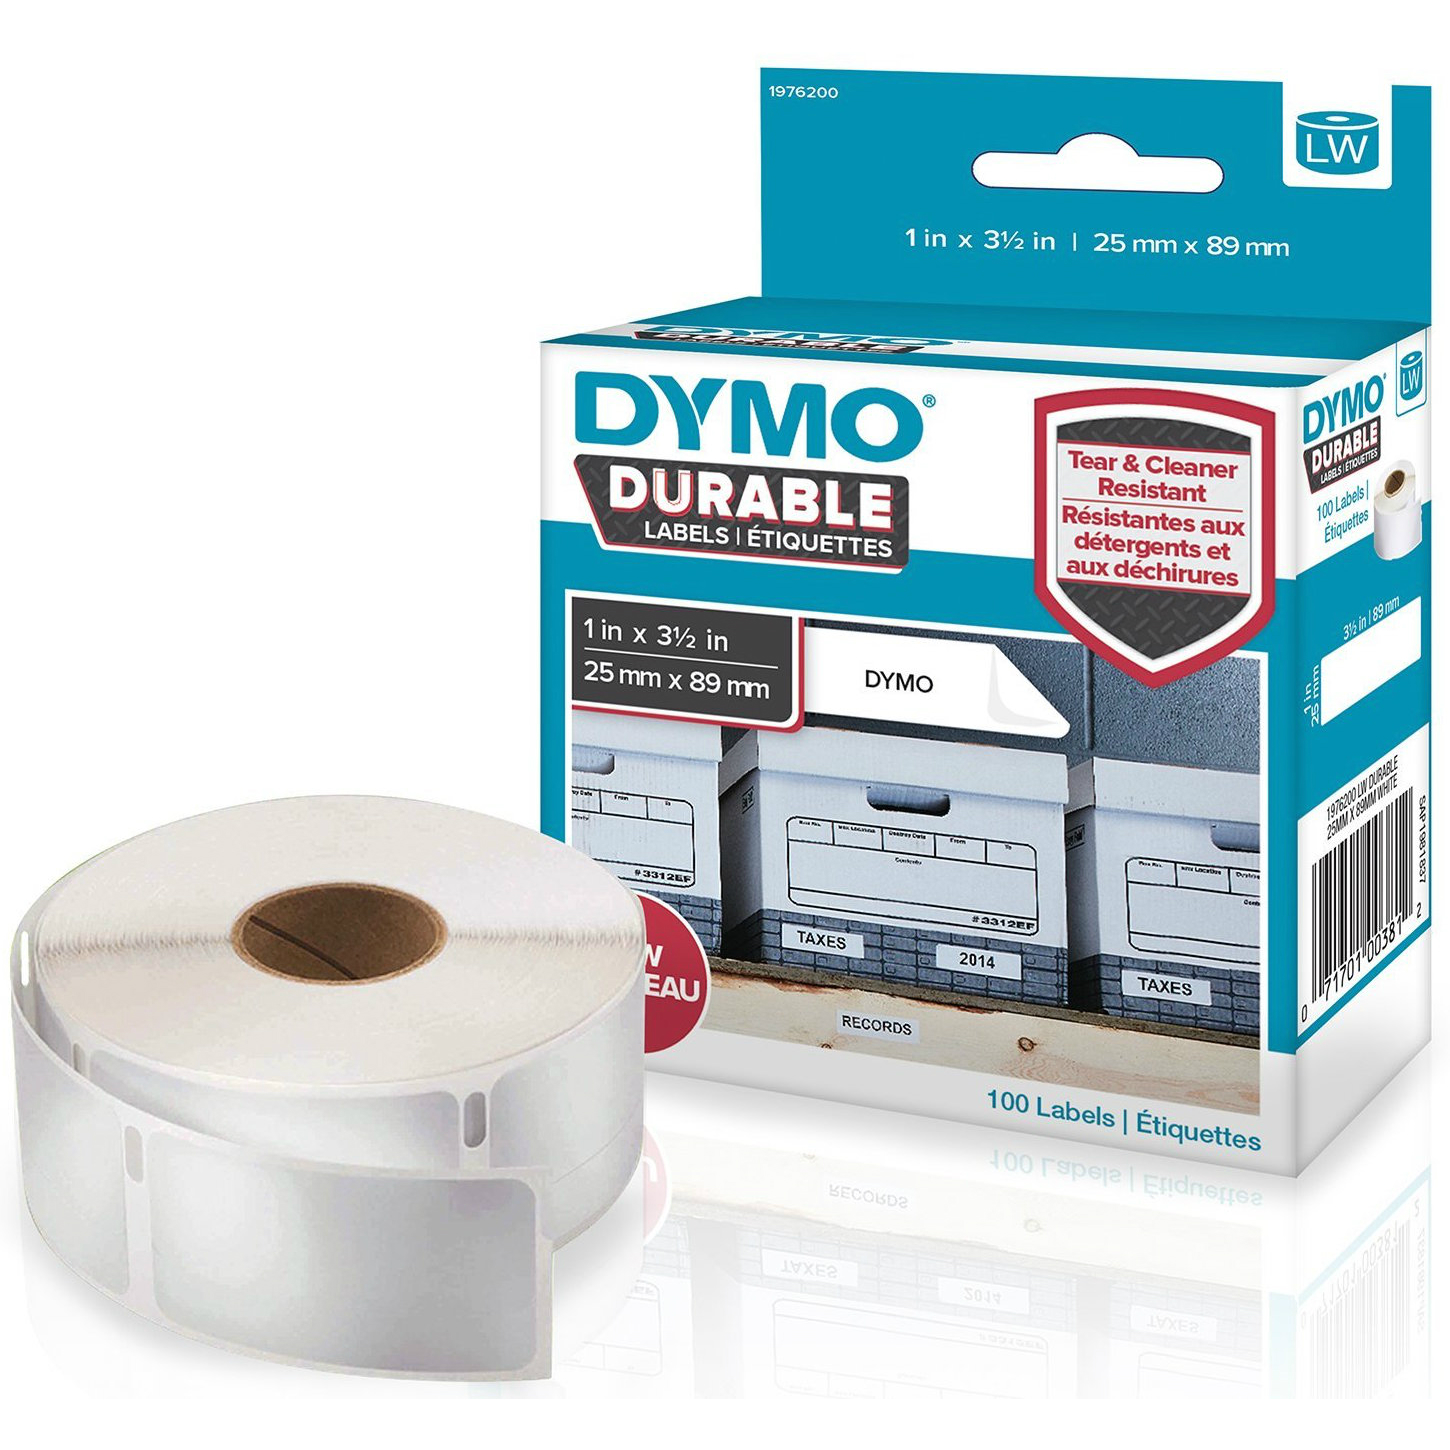 Original Dymo 1976200 White 25mm x 89mm Durable Label Tape - 100 Labels (1976200)